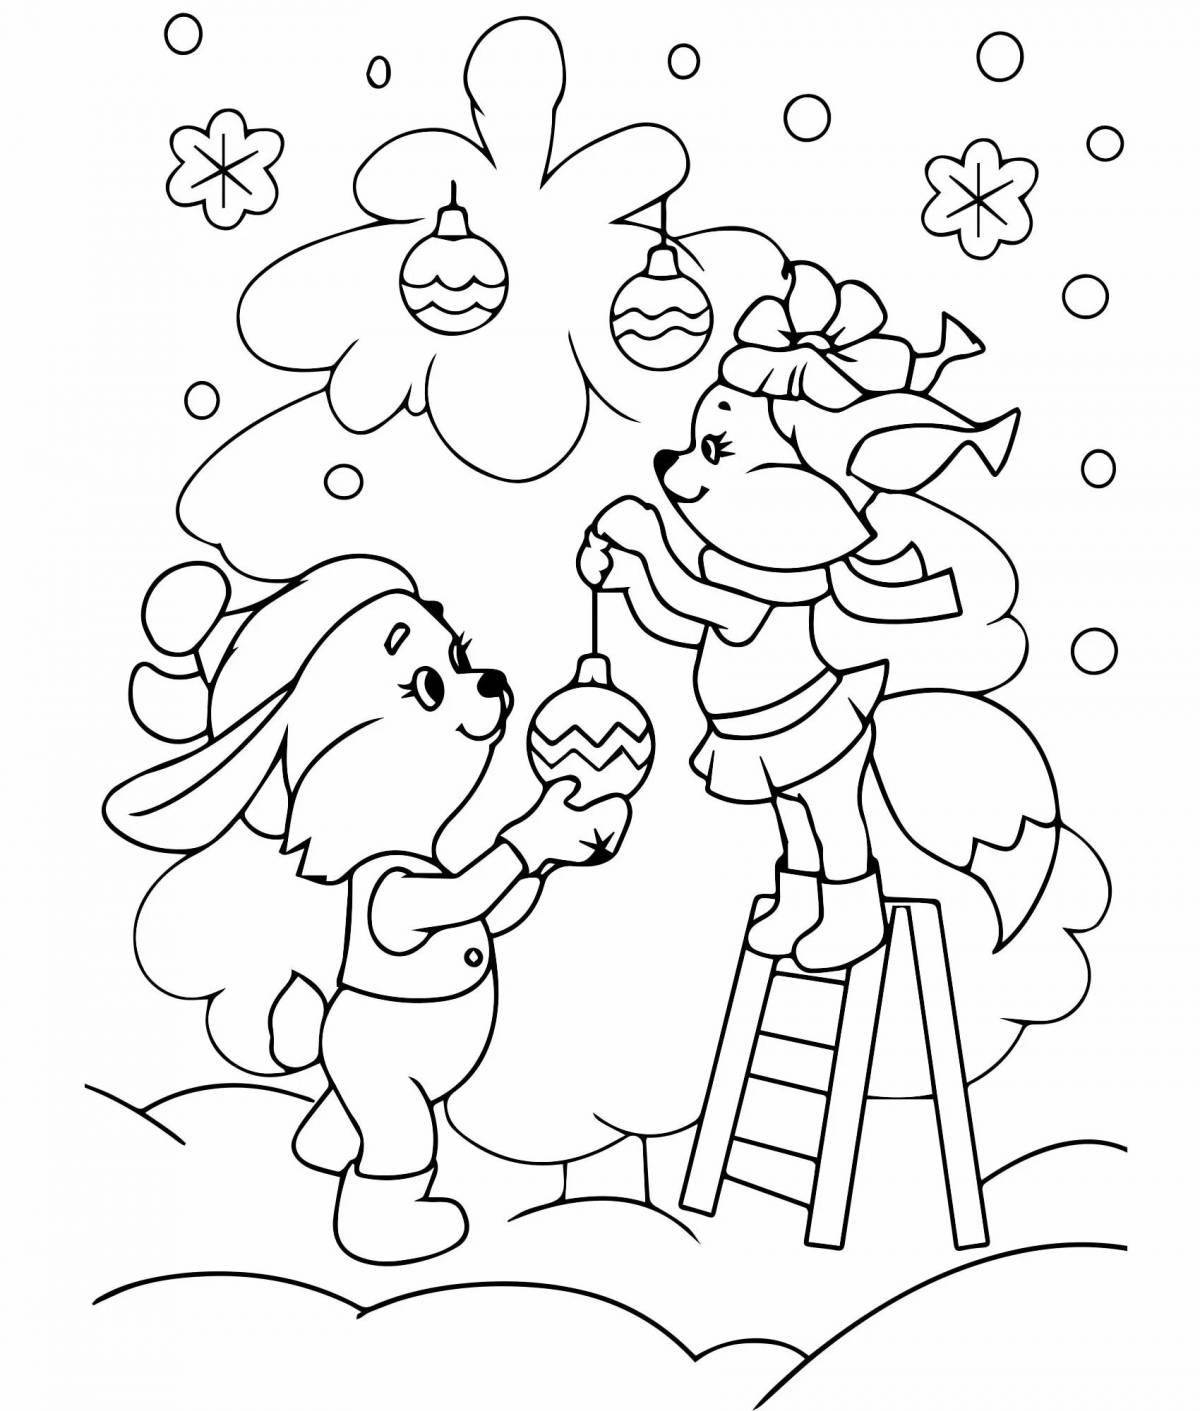 Joyful winter Christmas coloring book